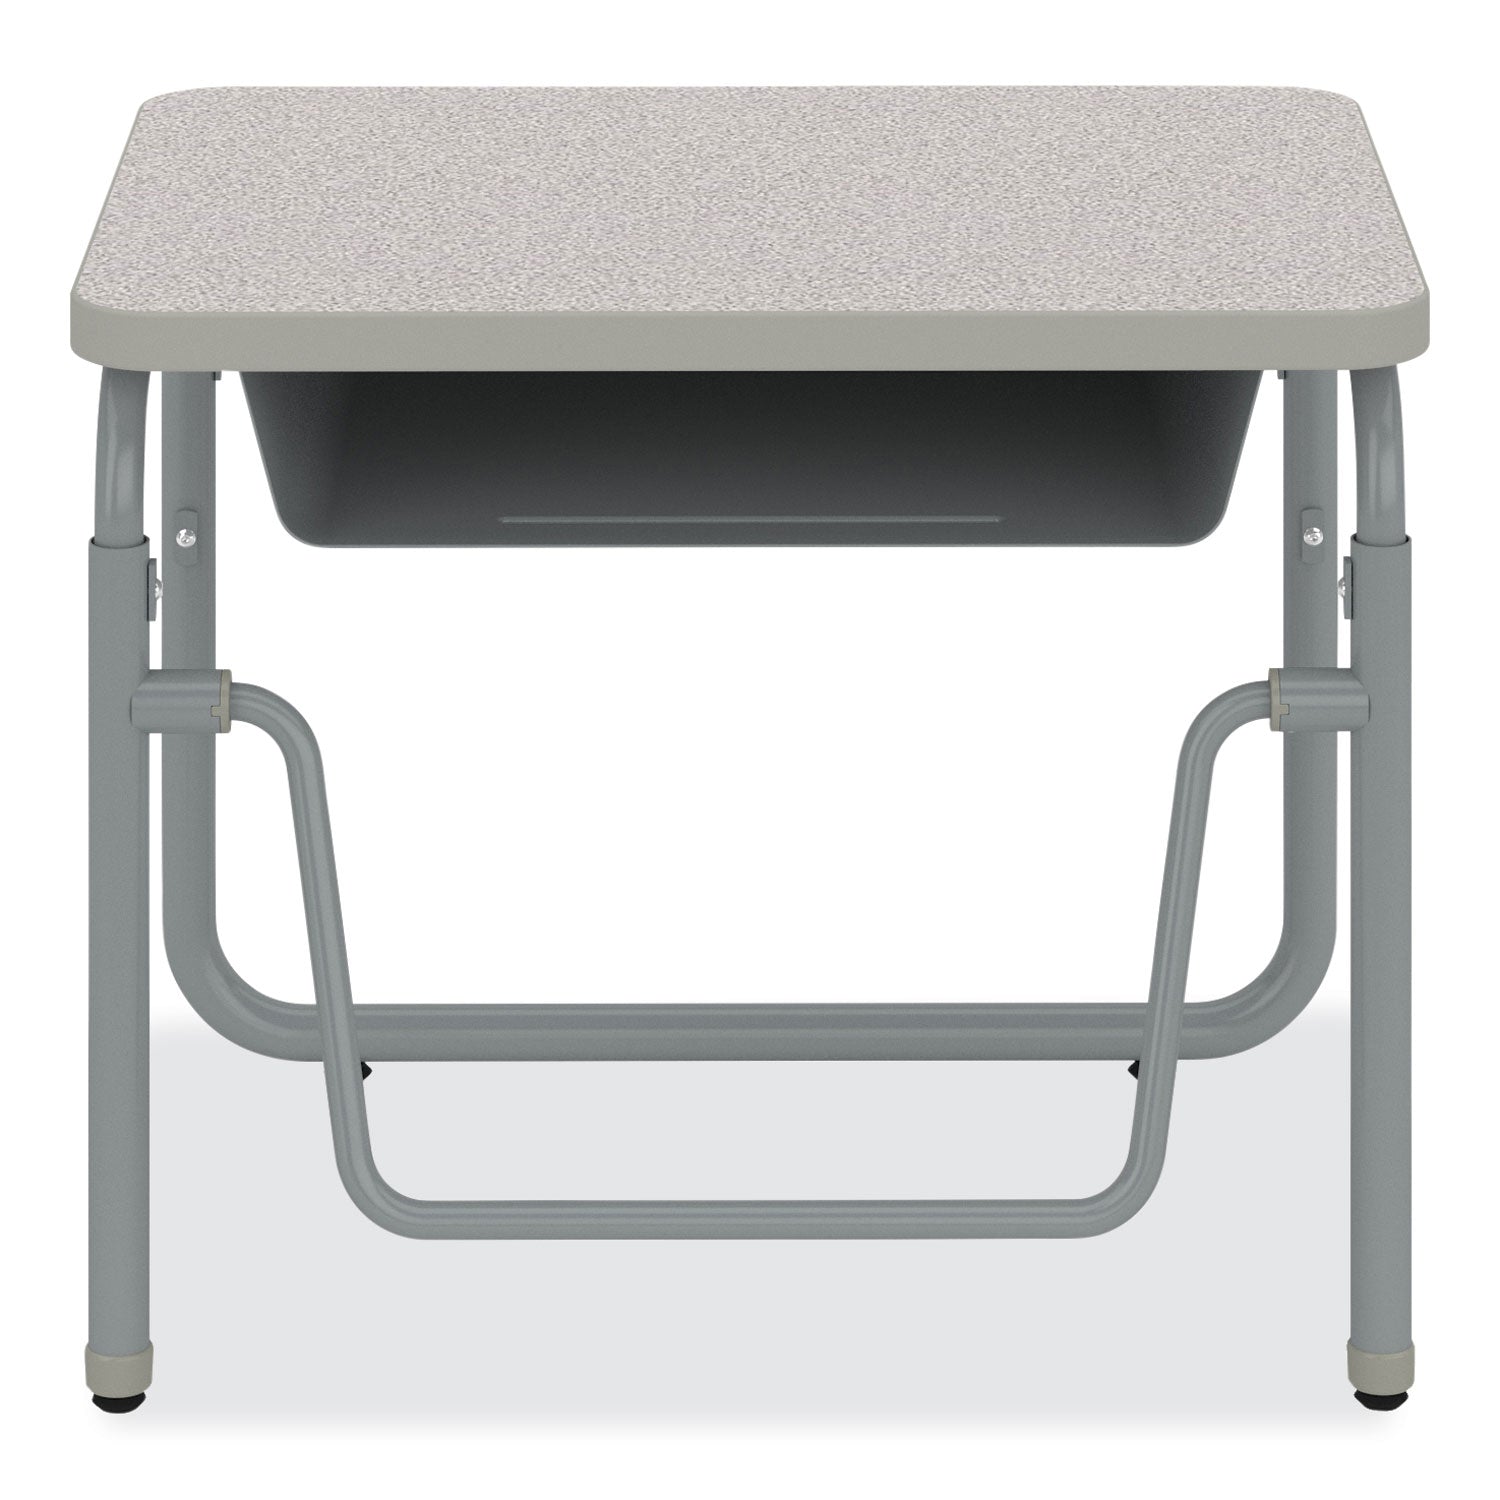 alphabetter-20-height-adjustable-student-desk-with-pendulum-bar-2775-x-1975-x-22-to-30-pebble-gray_saf1222gr - 2